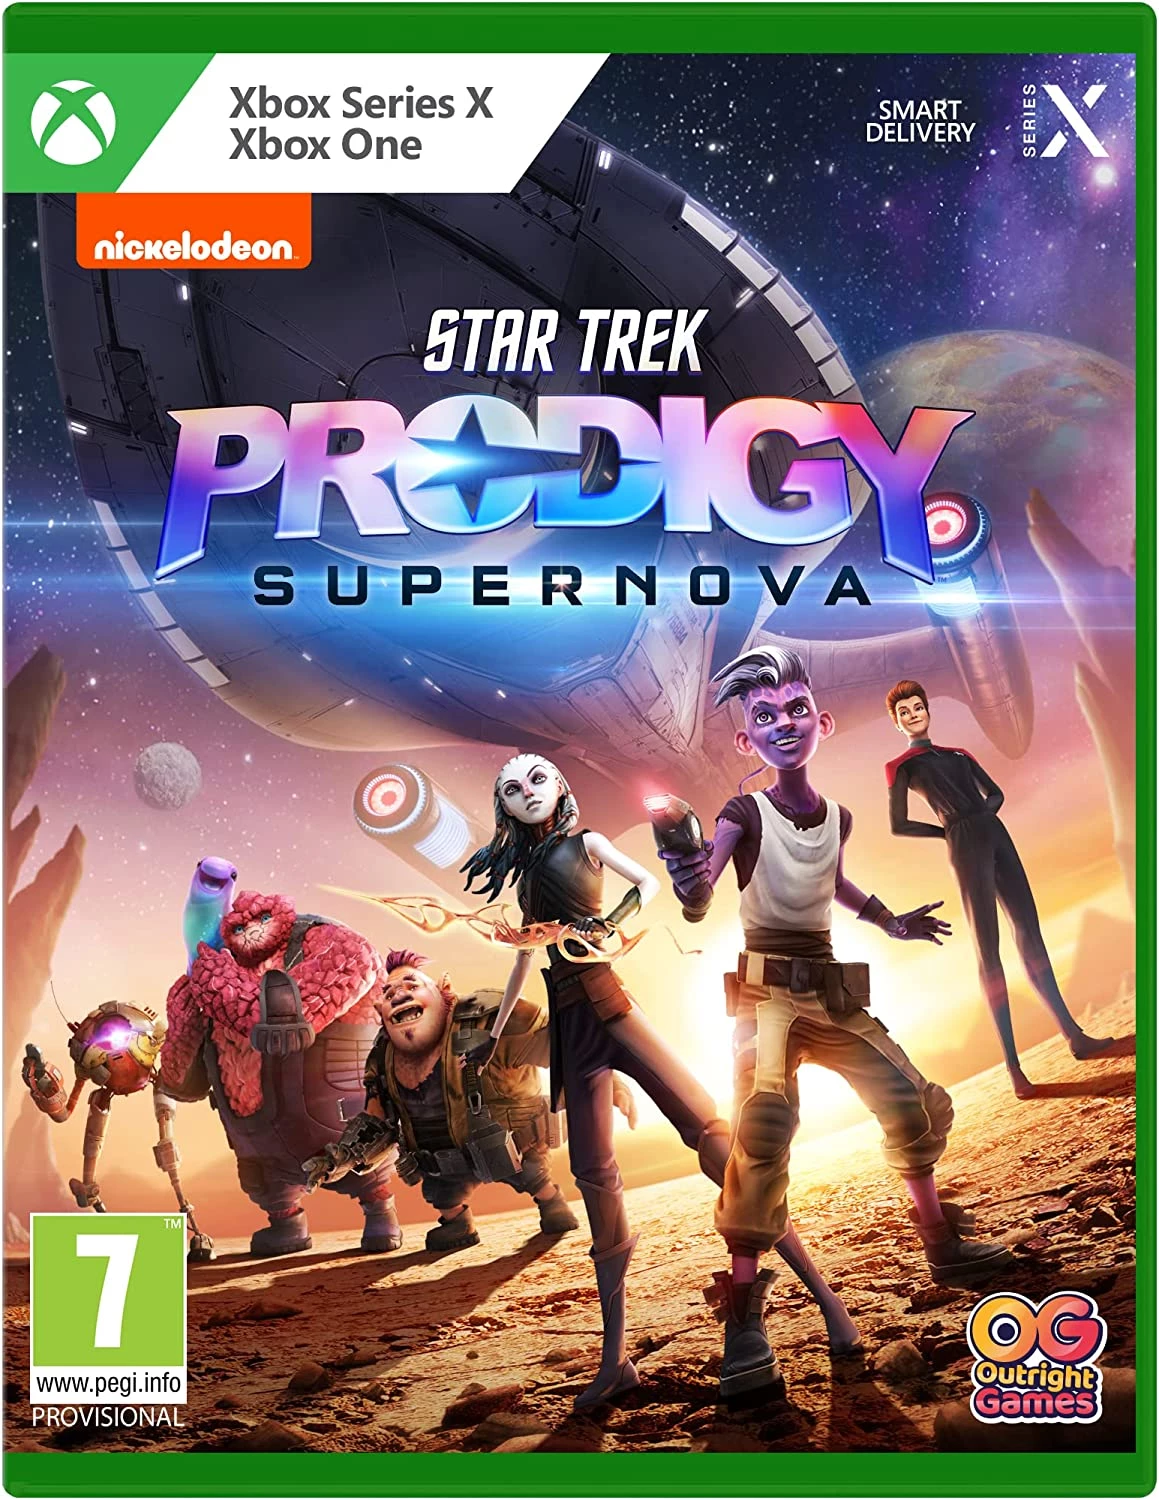 Star Trek: Prodigy Supernova (Xbox One), Outright Games 